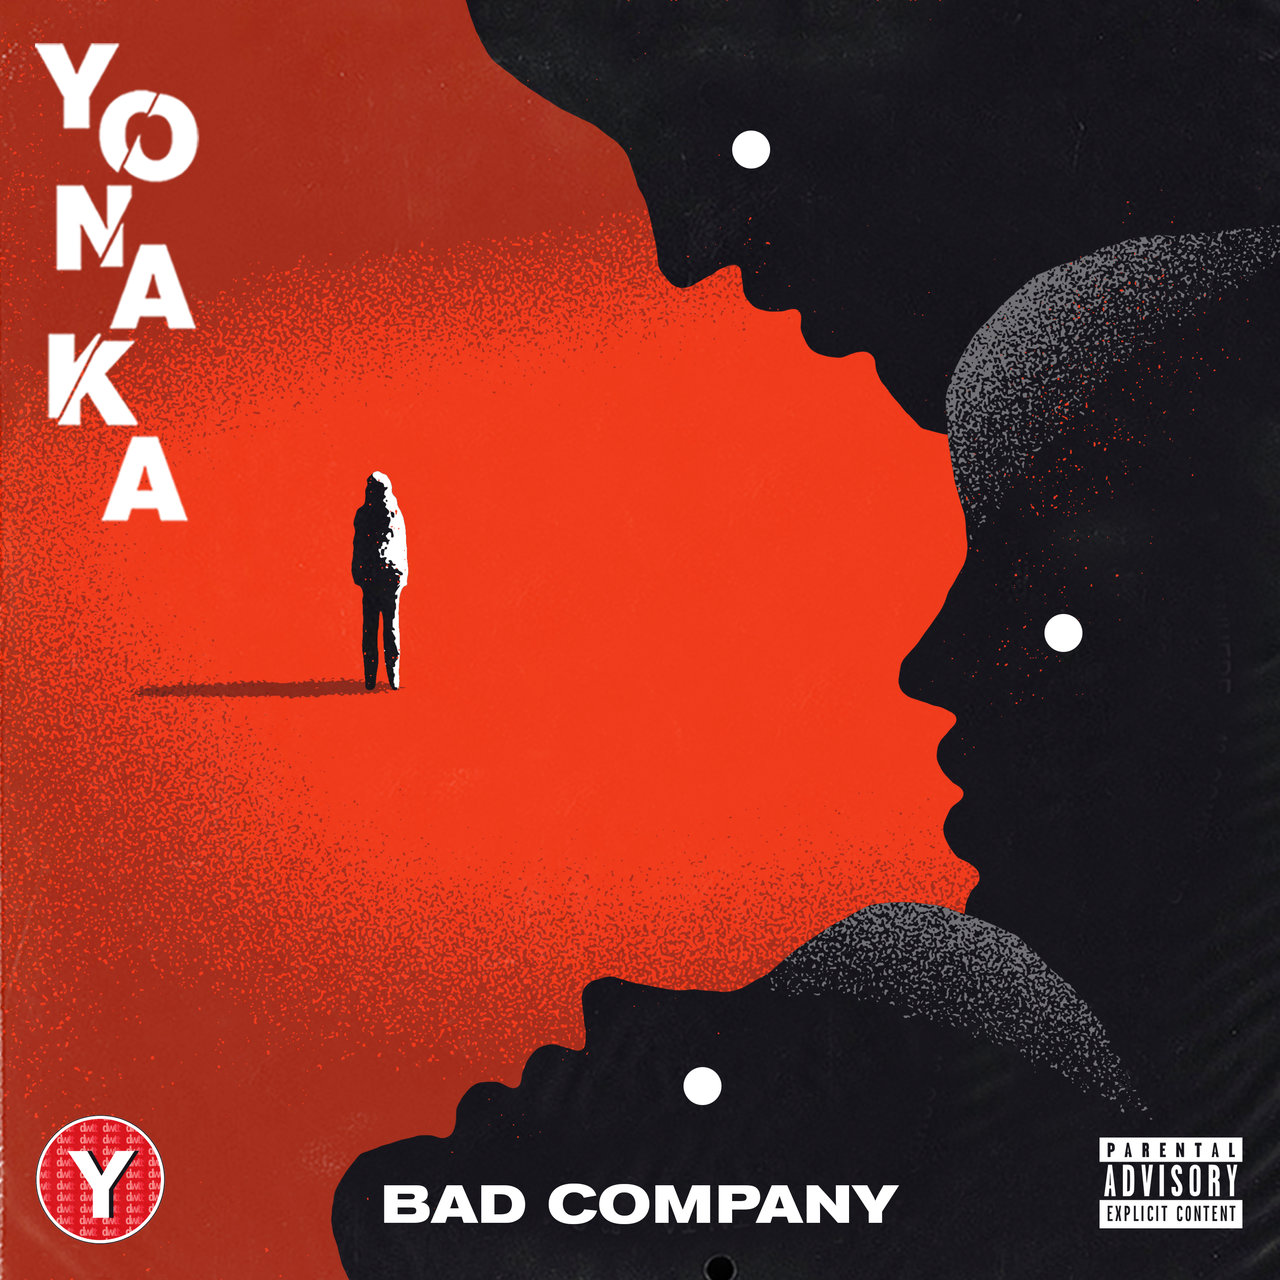 YONAKA Bad Company cover artwork